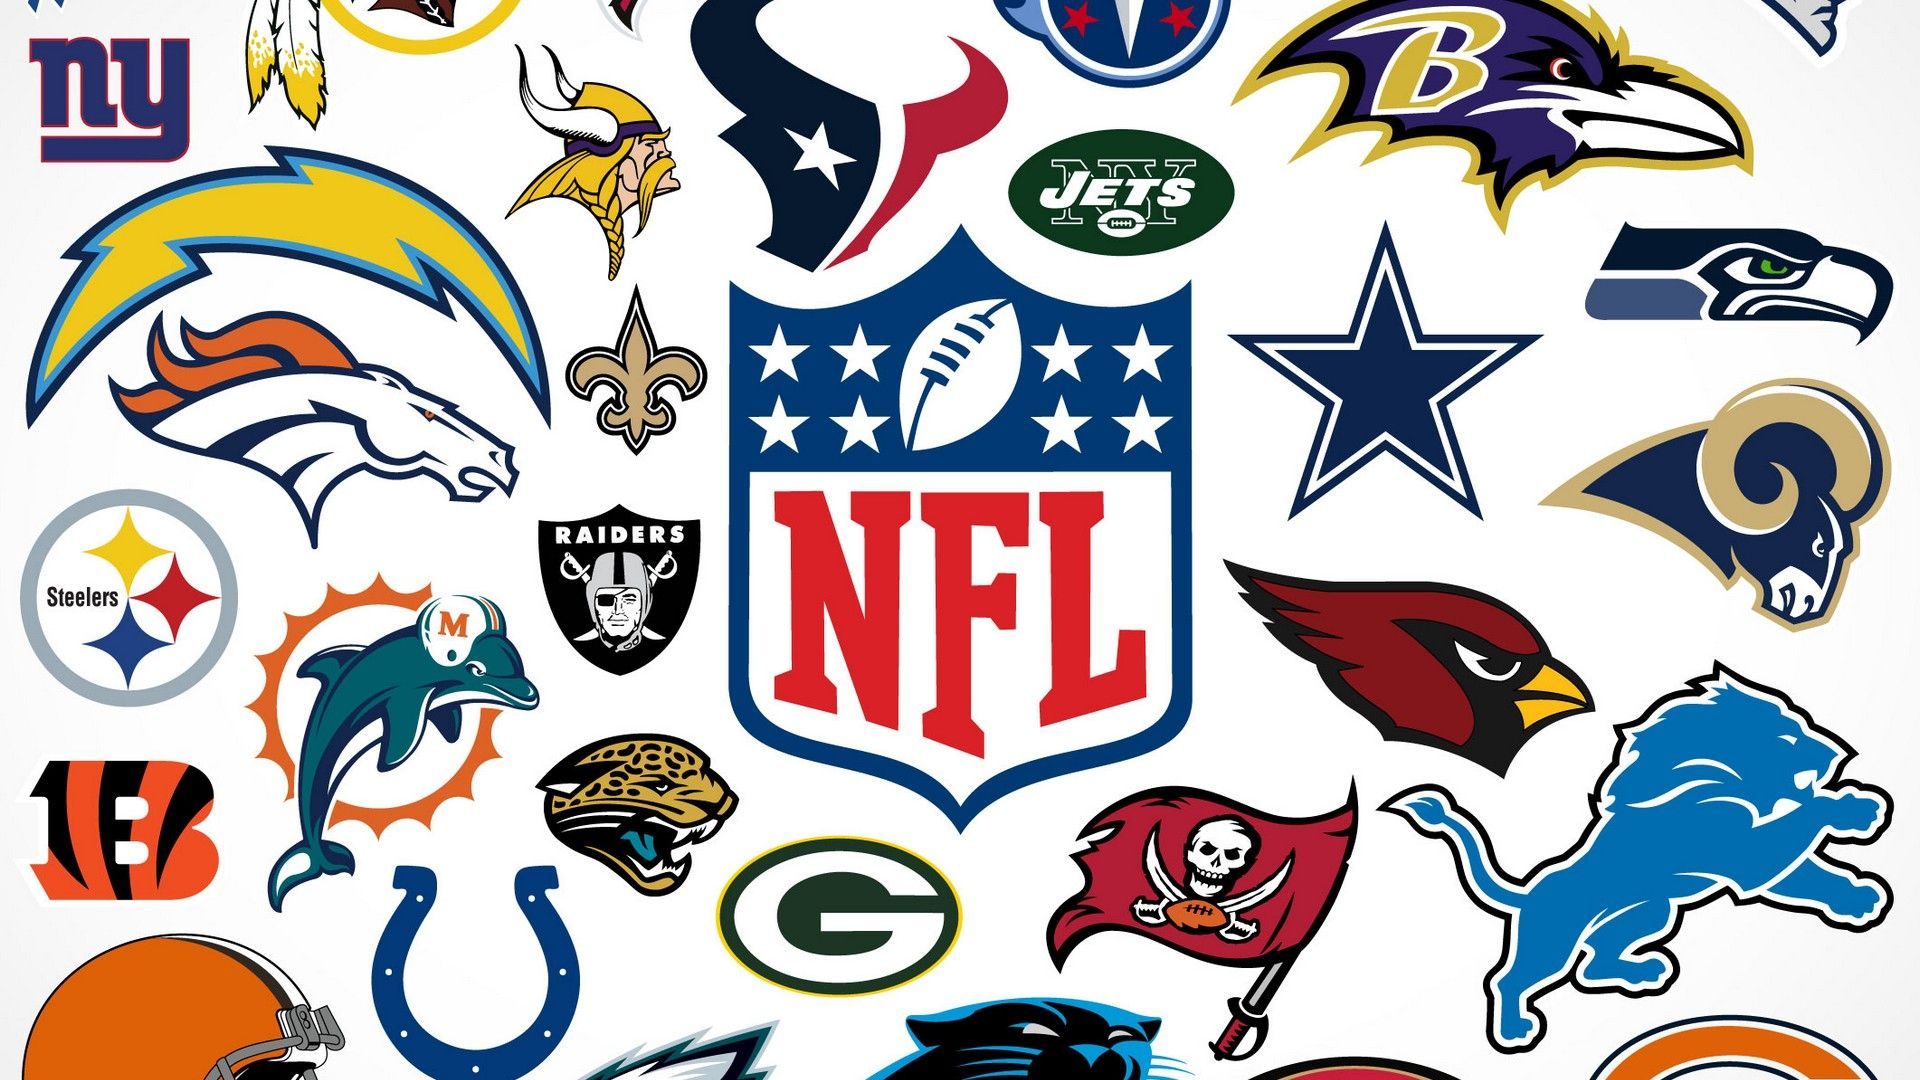 Windows Wallpaper Cool NFL NFL Football Wallpaper. Nfl teams logos, Nfl logo, Football logo